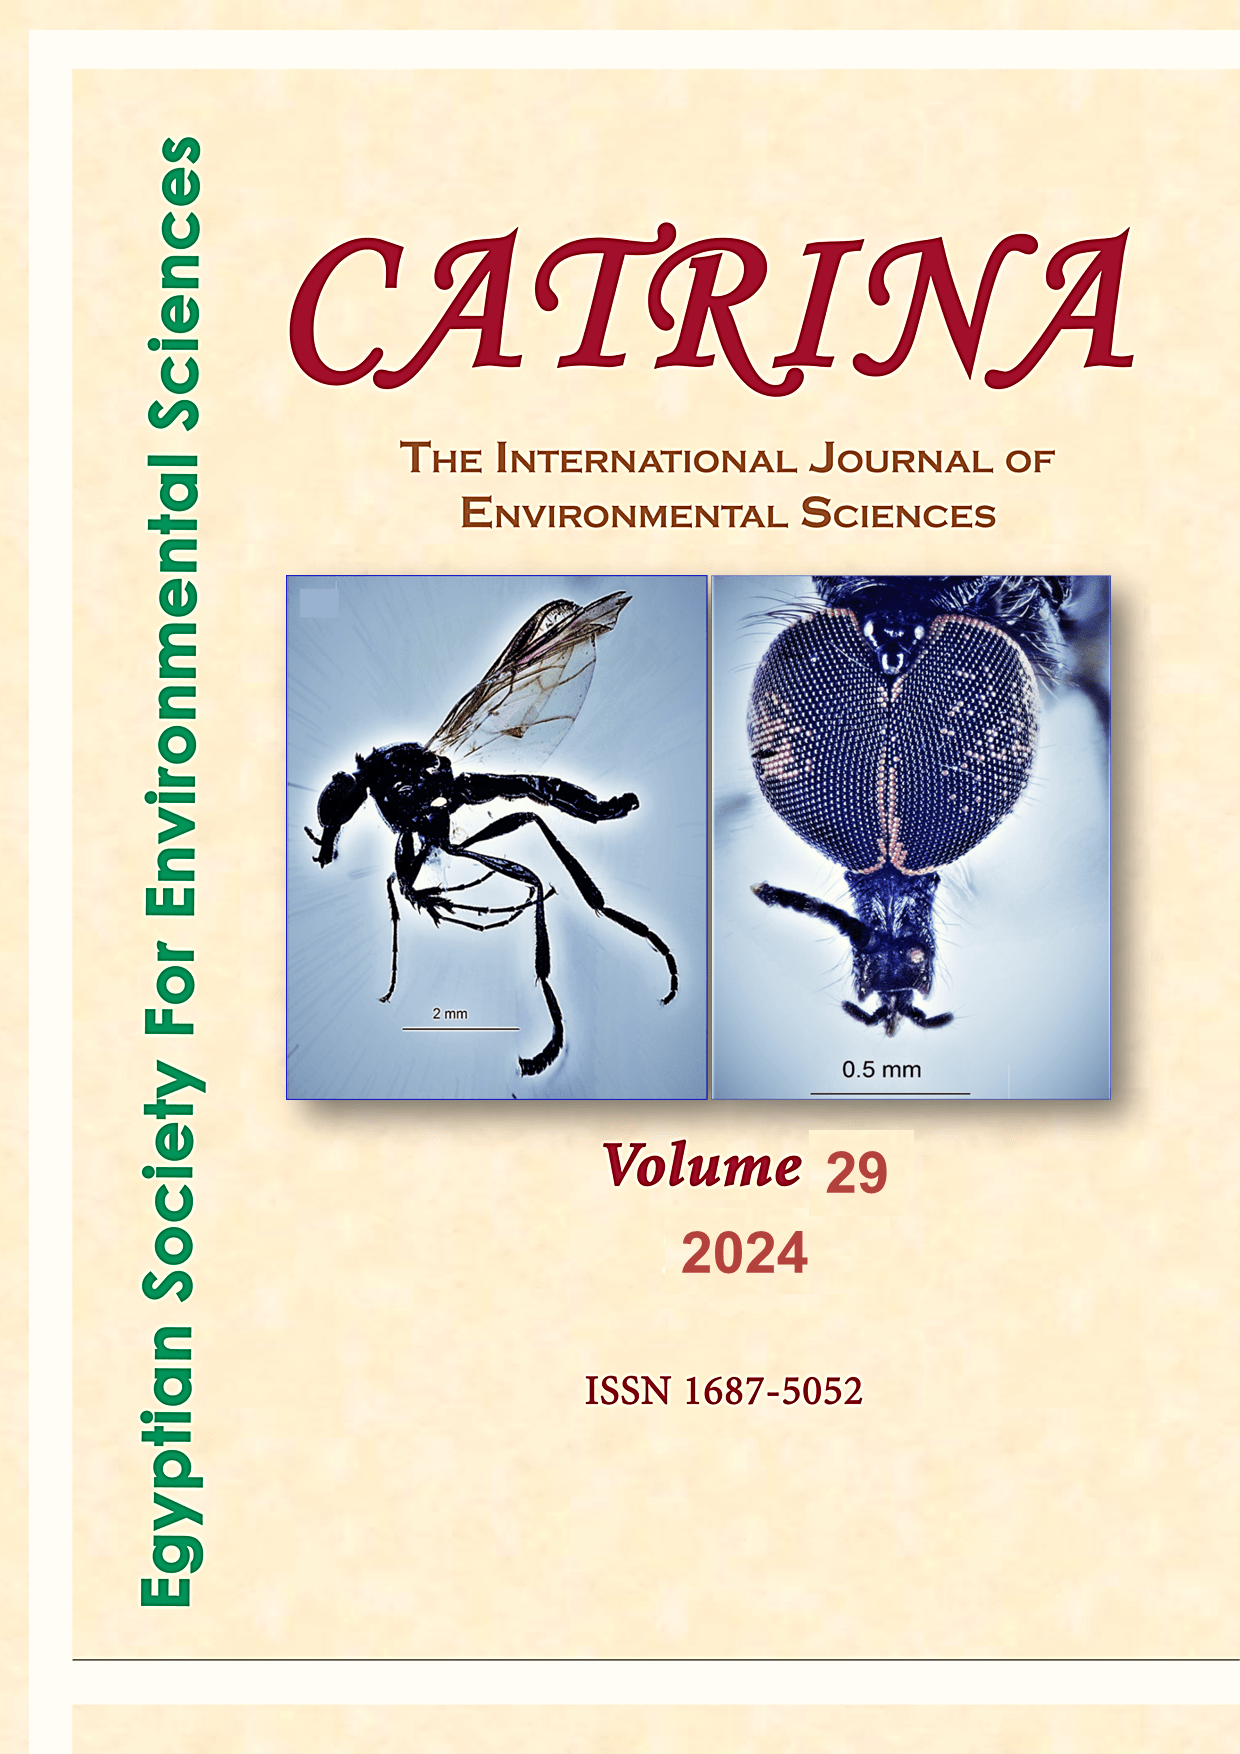 Catrina: The International Journal of Environmental Sciences